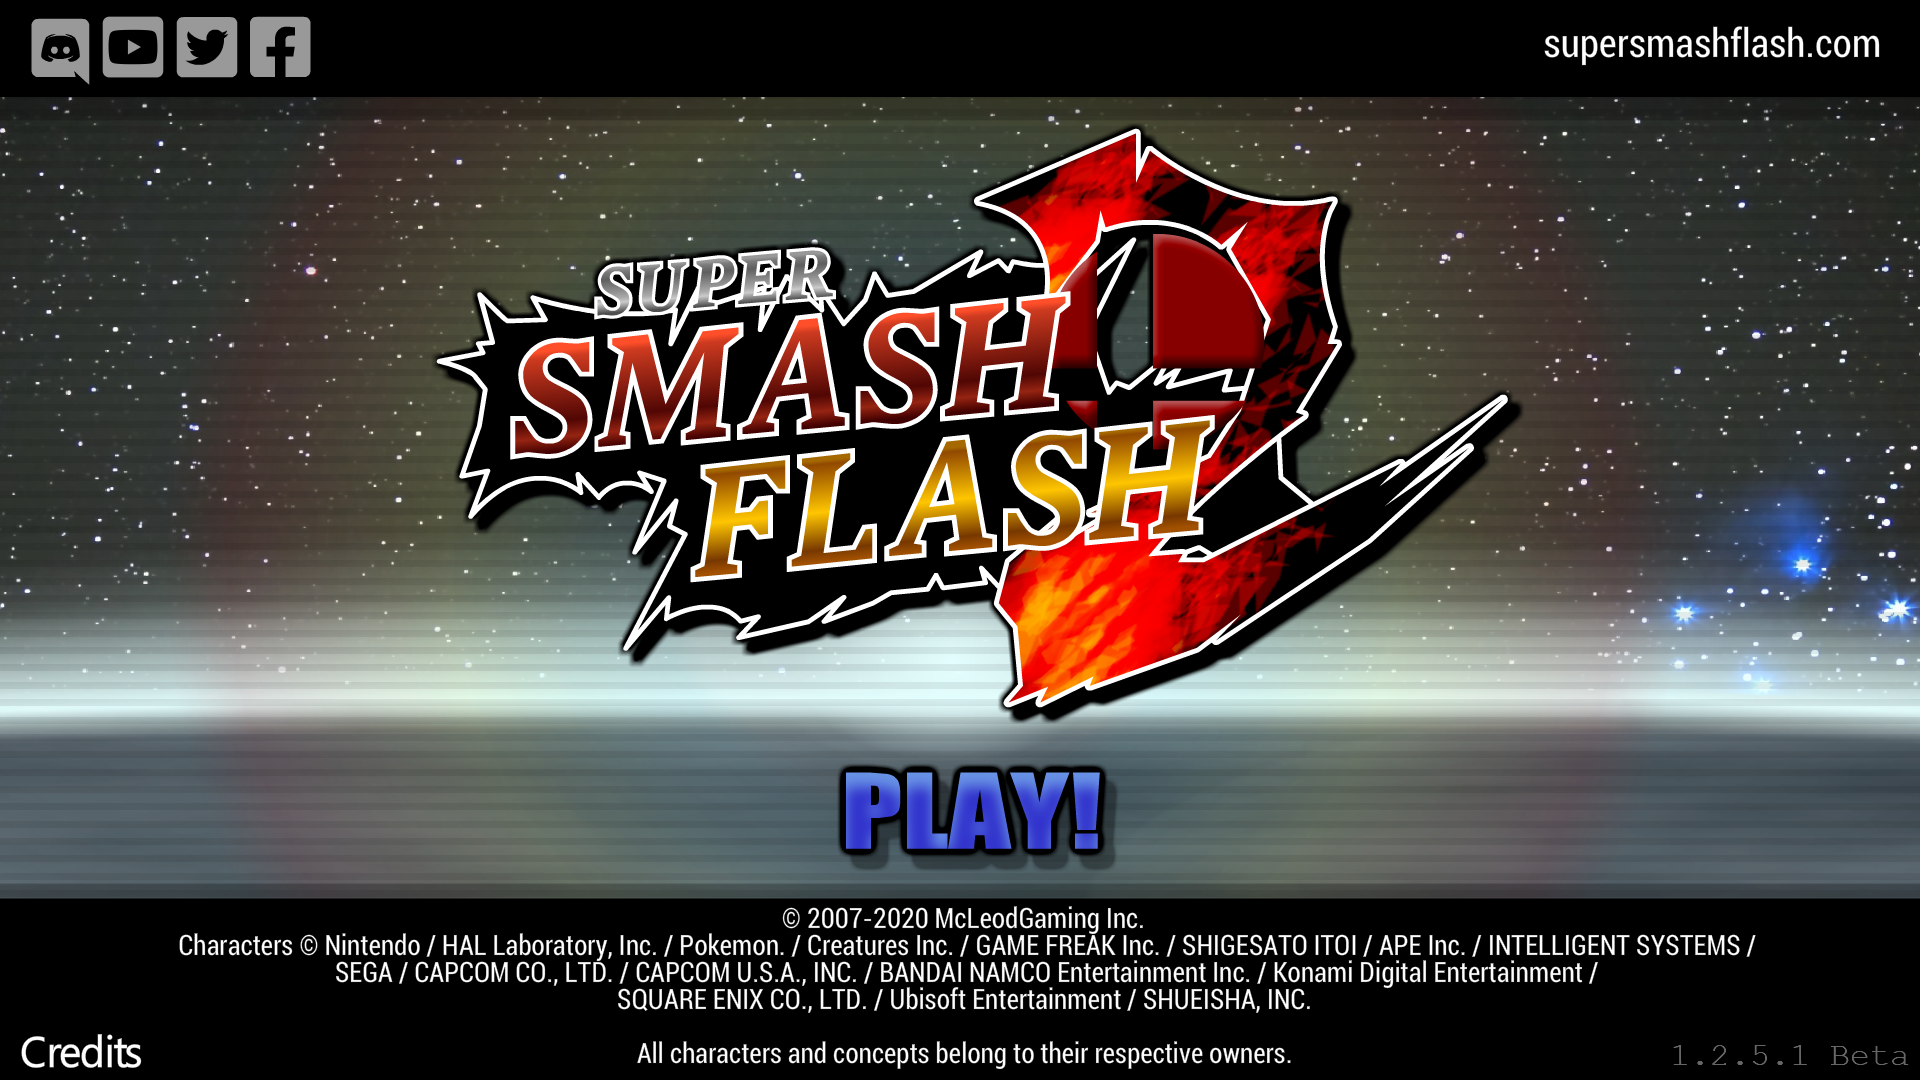 super smash flash 2 not loading